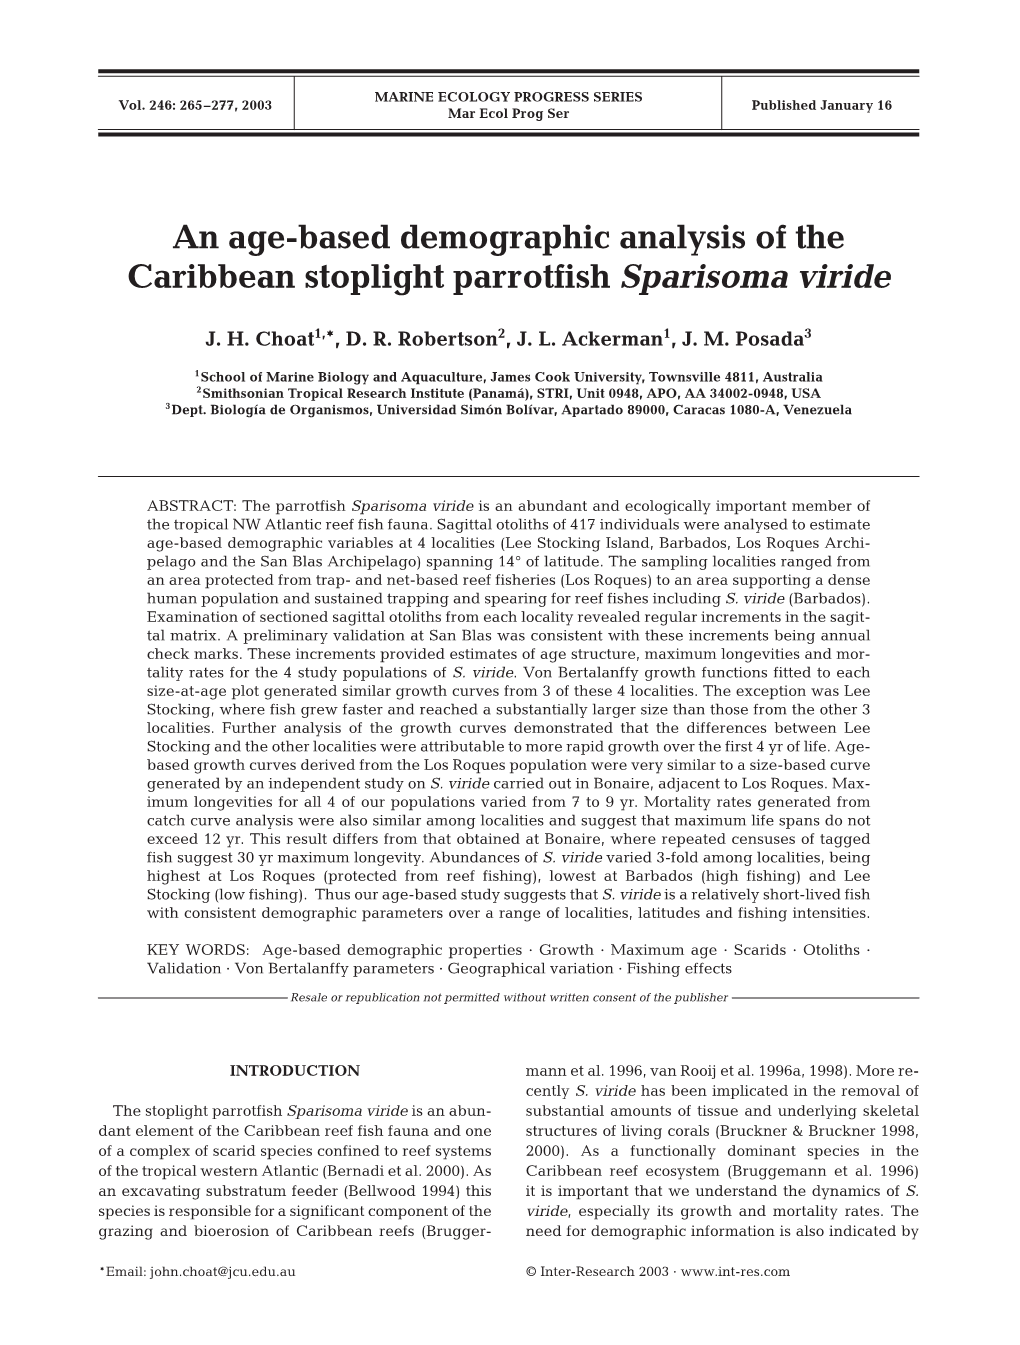 An Age-Based Demographic Analysis of the Caribbean Stoplight Parrotfish Sparisoma Viride